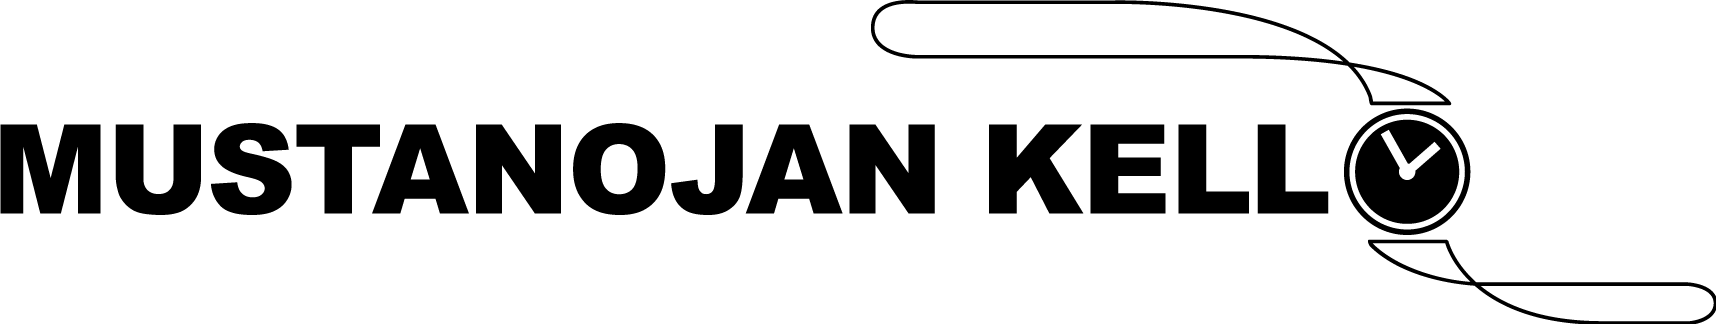 Mustanojan Kello Logo